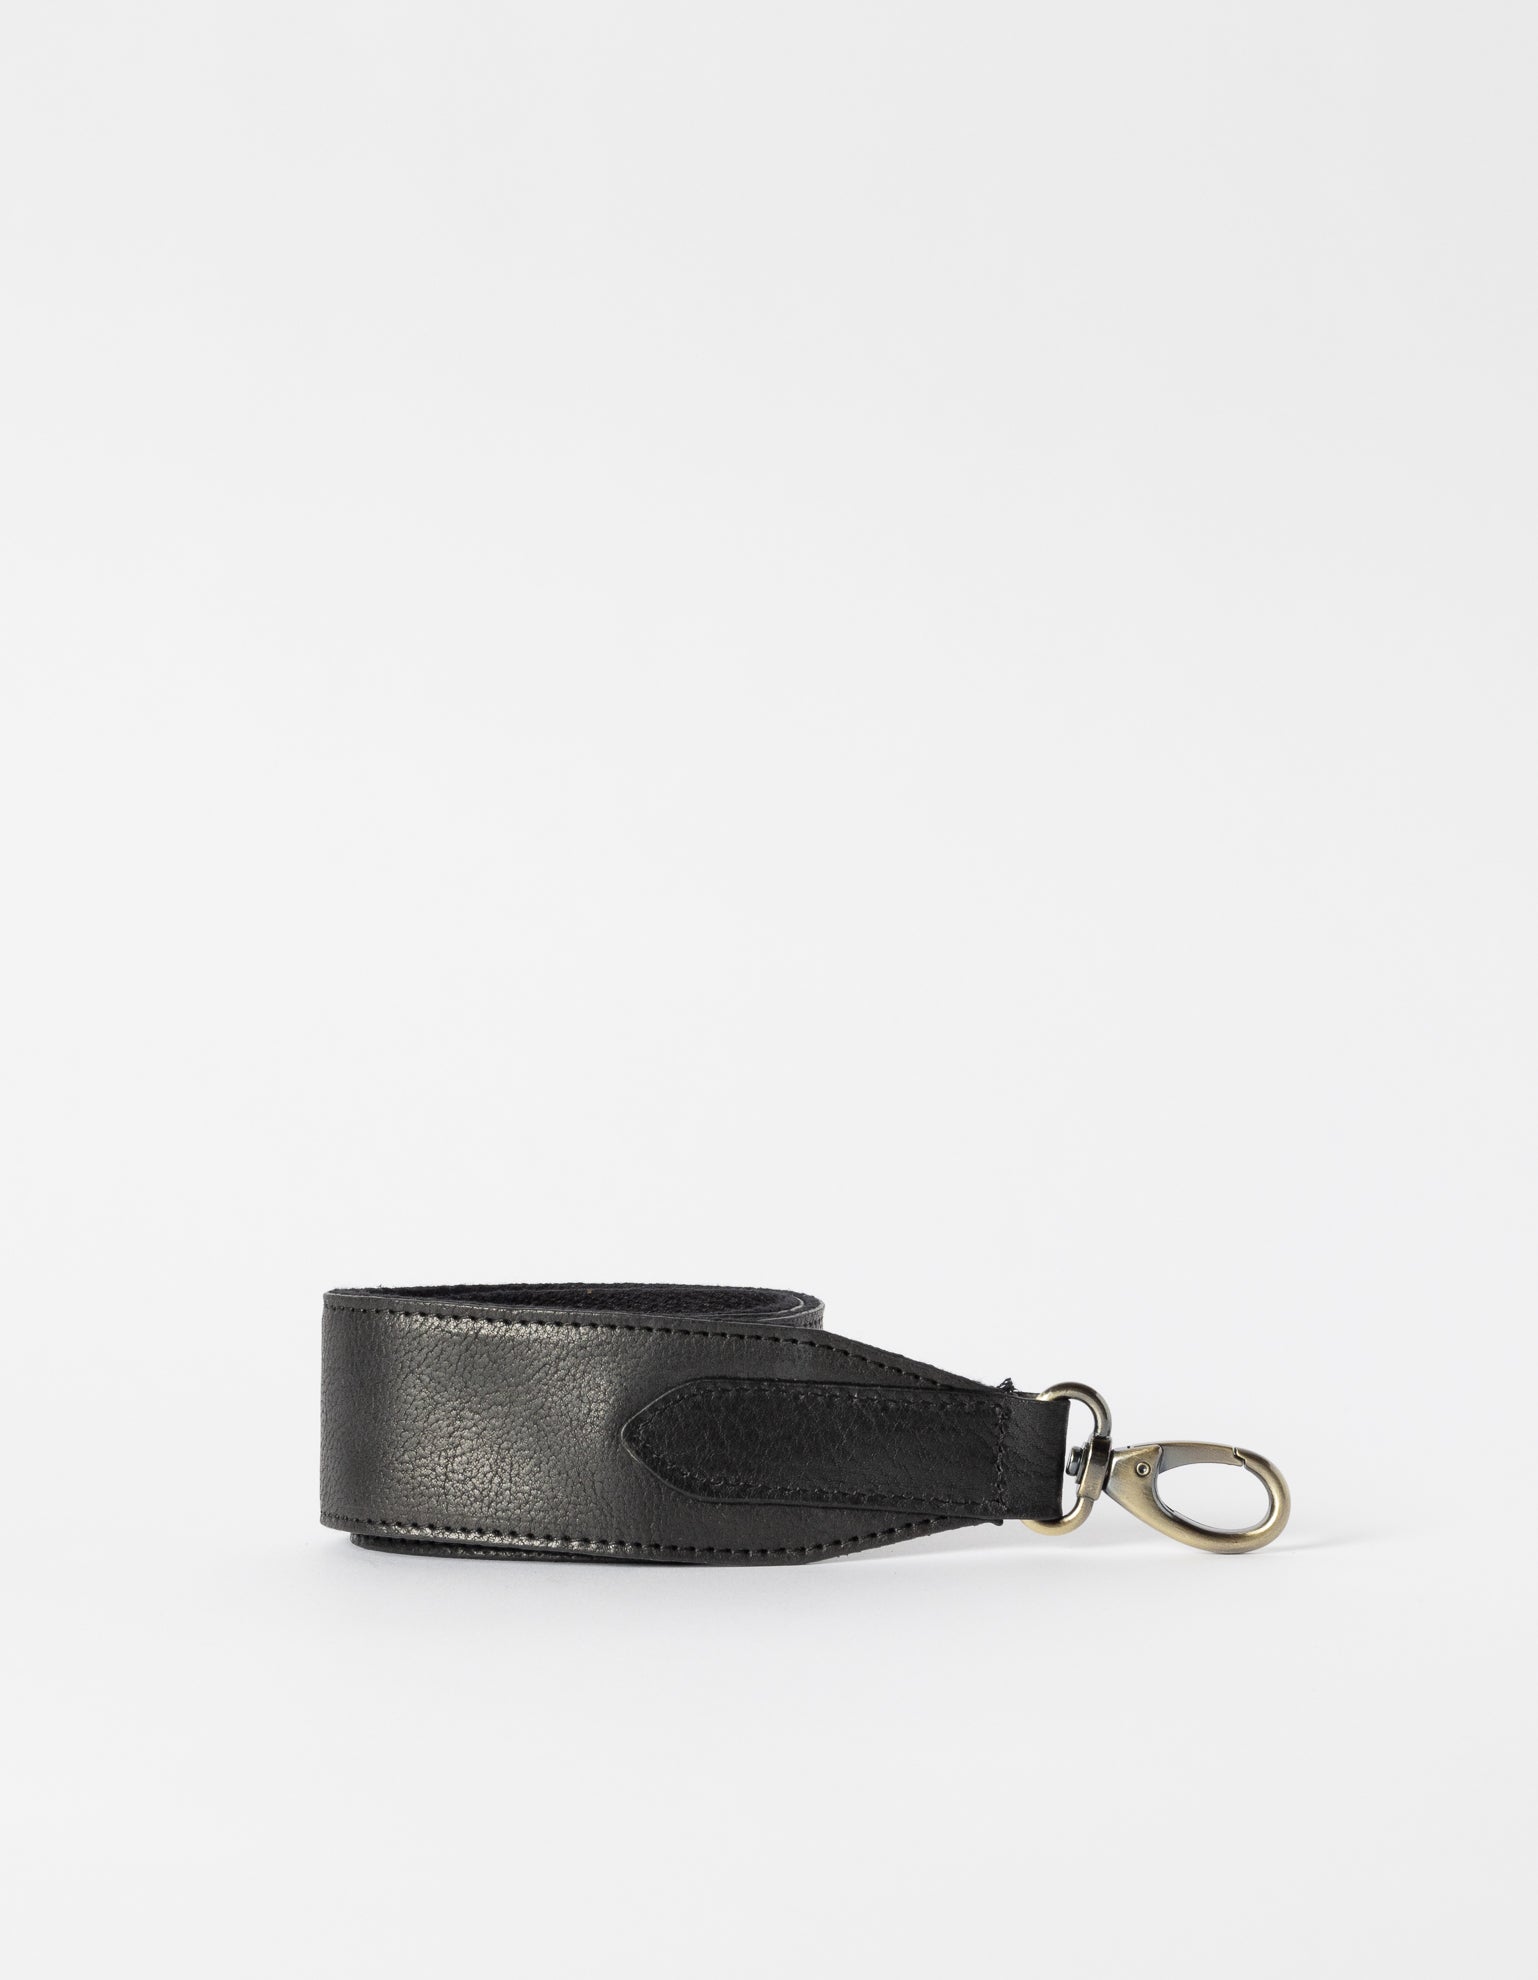 Oliva & Sofia add-on handbag strap in black - product image